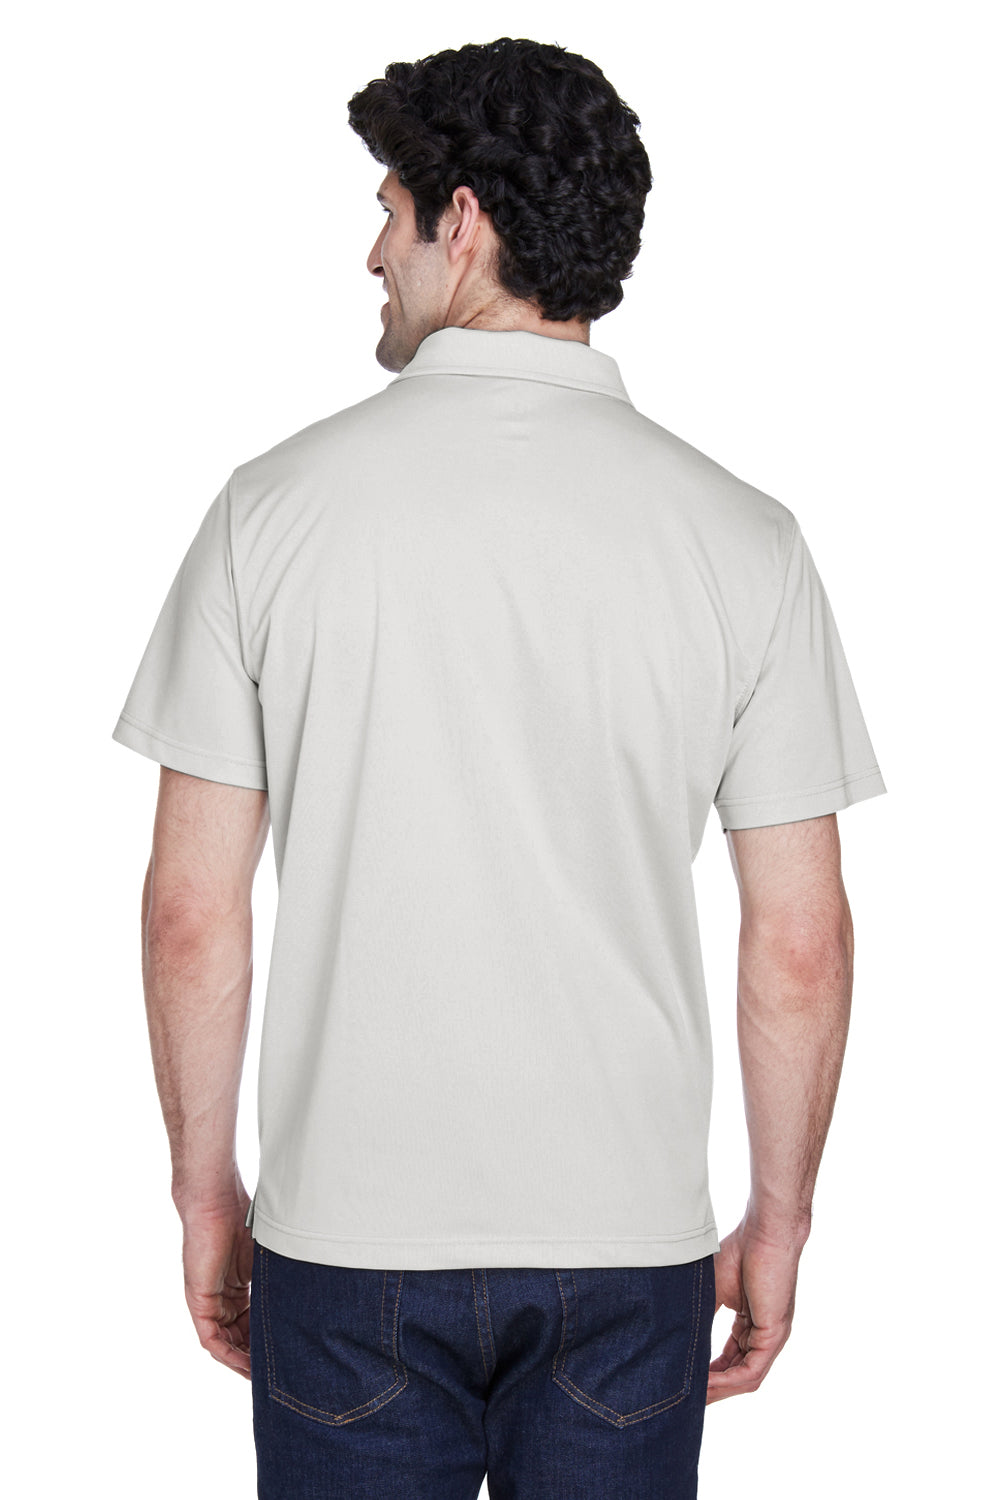 Team 365 TT21 Mens Command Performance Moisture Wicking Short Sleeve Polo Shirt Silver Grey Back